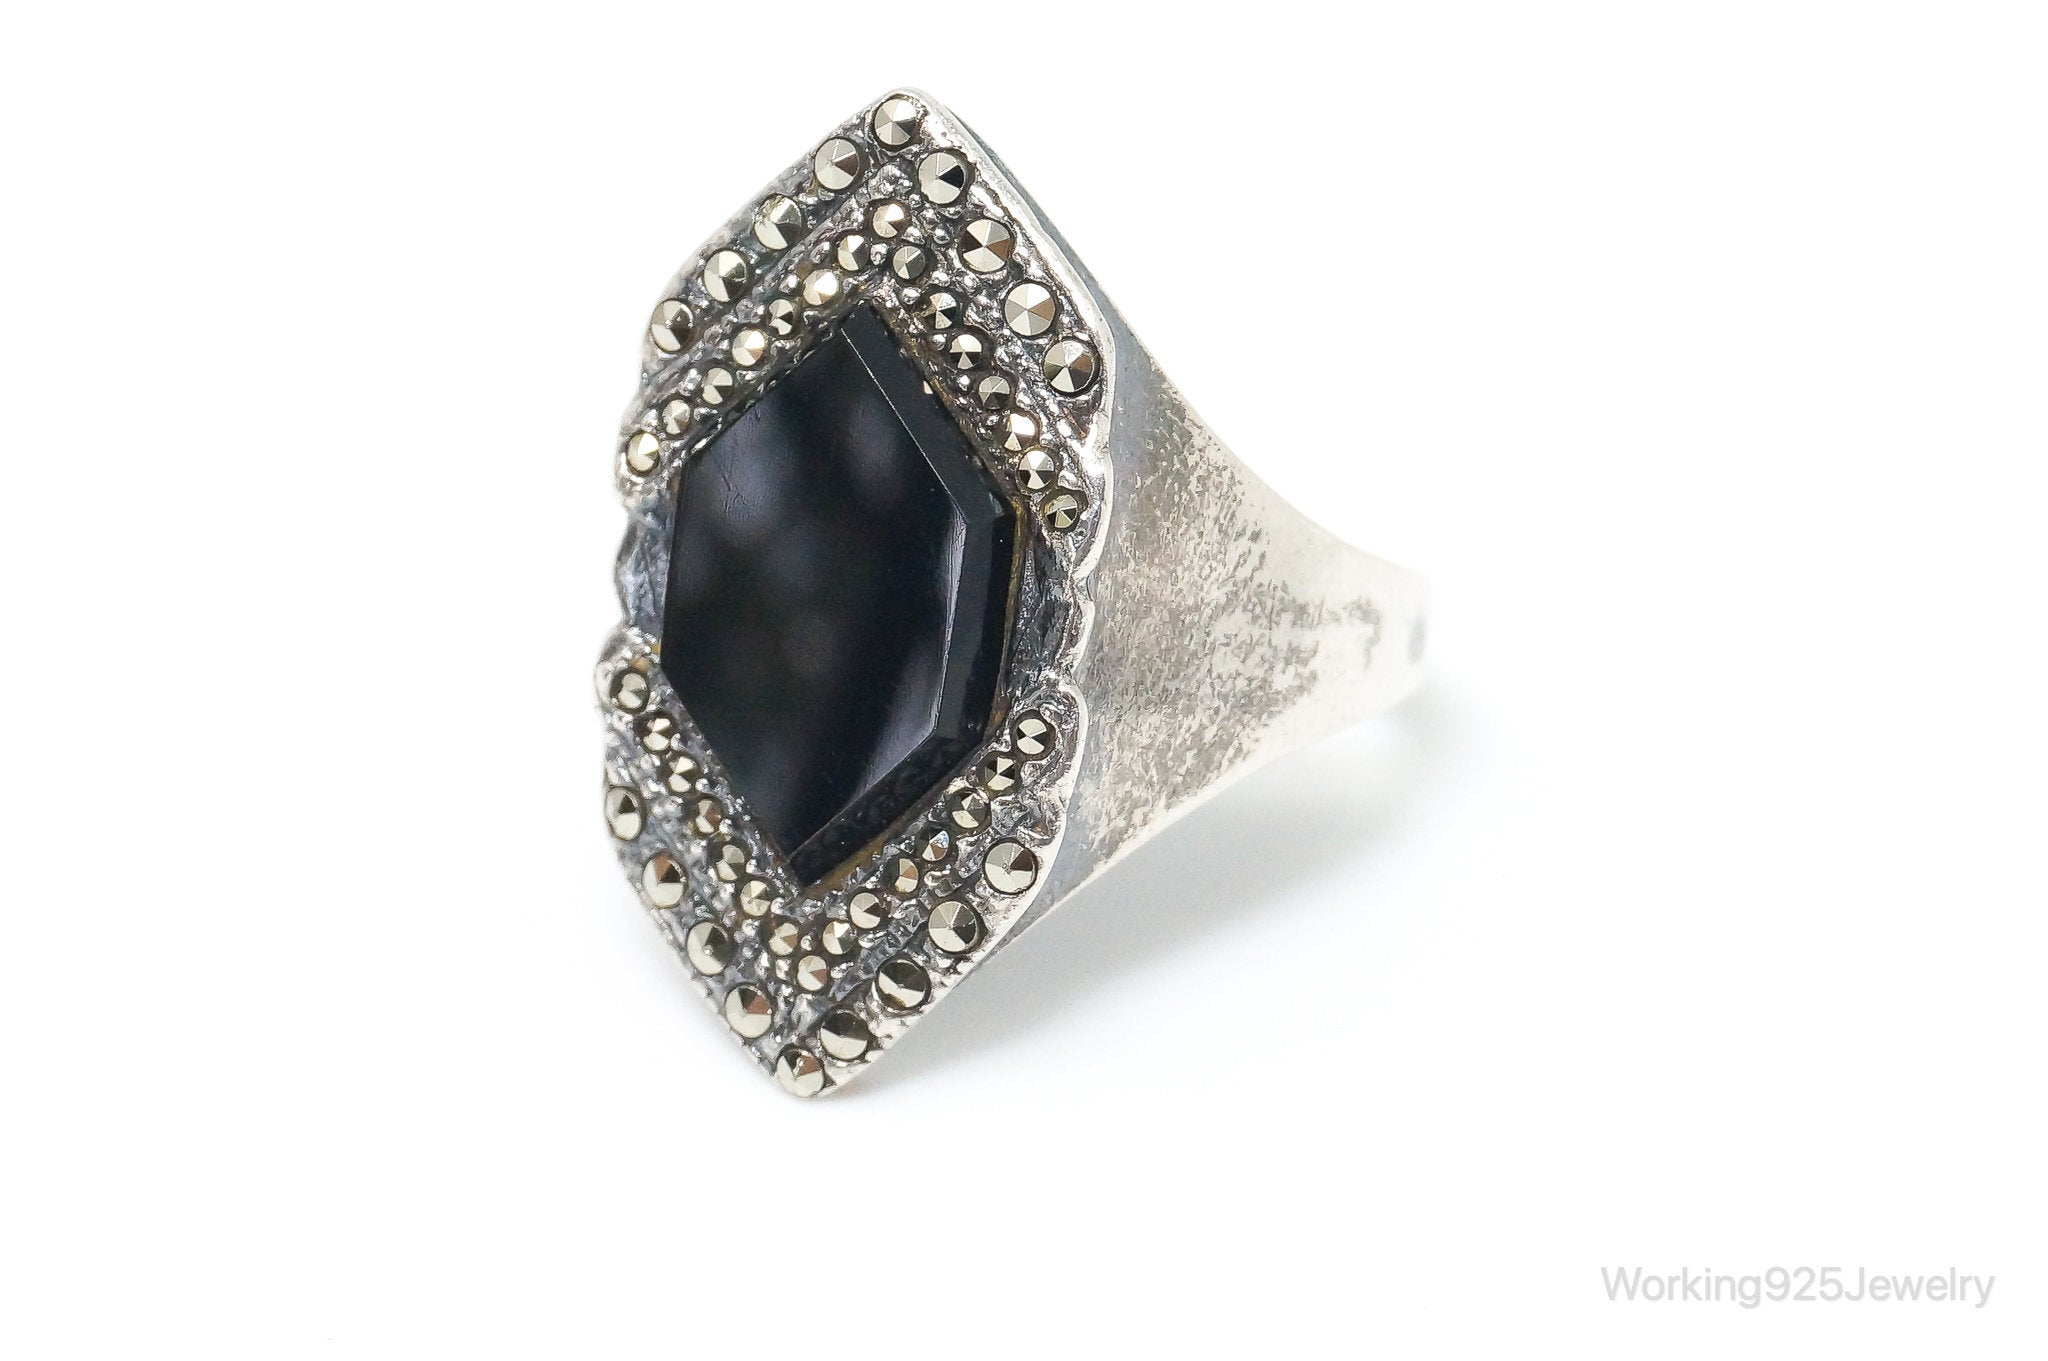 VTG Art Deco Marcasite Black Onyx Sterling Silver Statement Ring - SZ 7.5